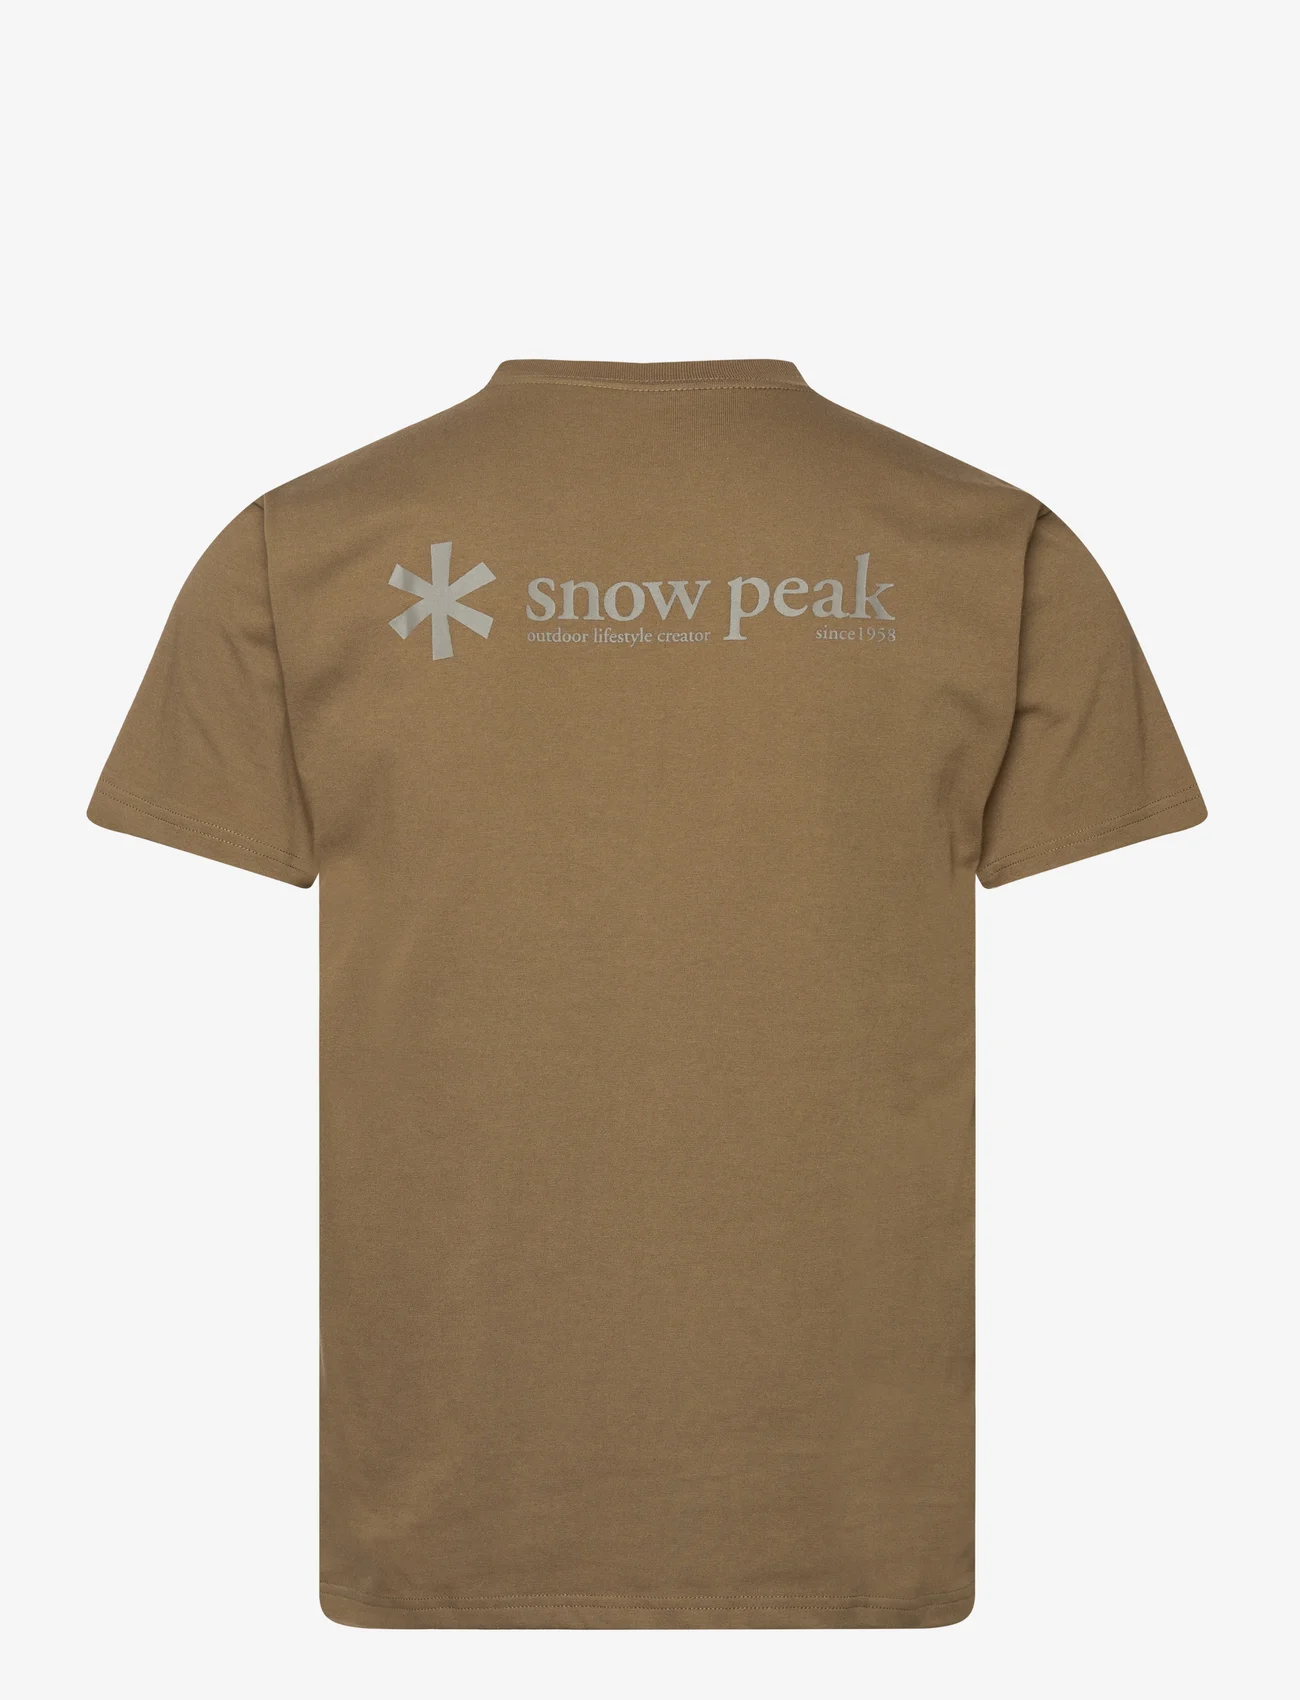 SNOW PEAK - SNOW PEAK LOGO T SHIRT - marškinėliai trumpomis rankovėmis - olive - 1